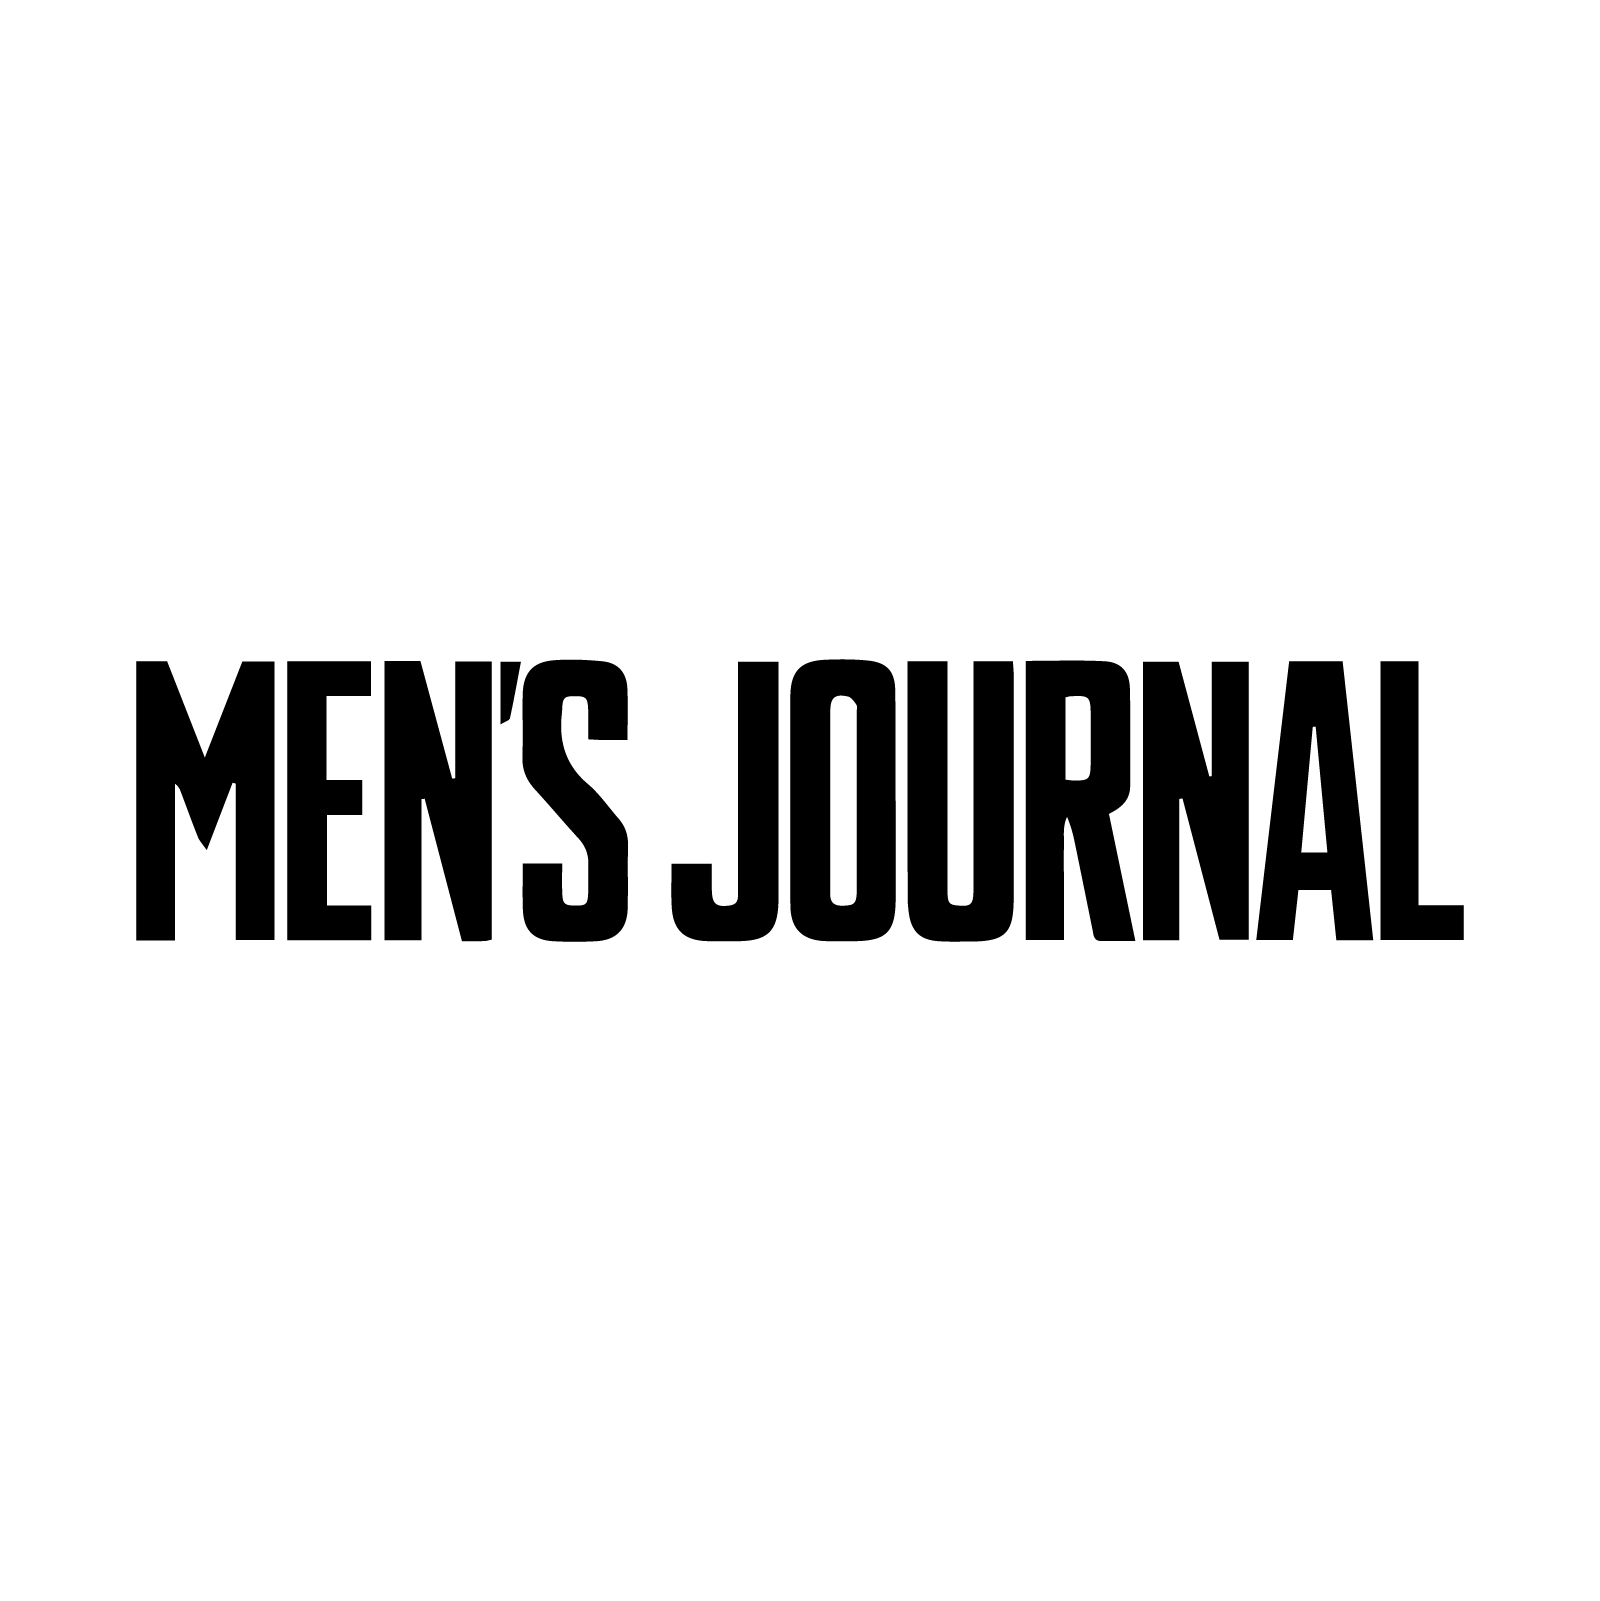 Press Logos_Men's Journal.png